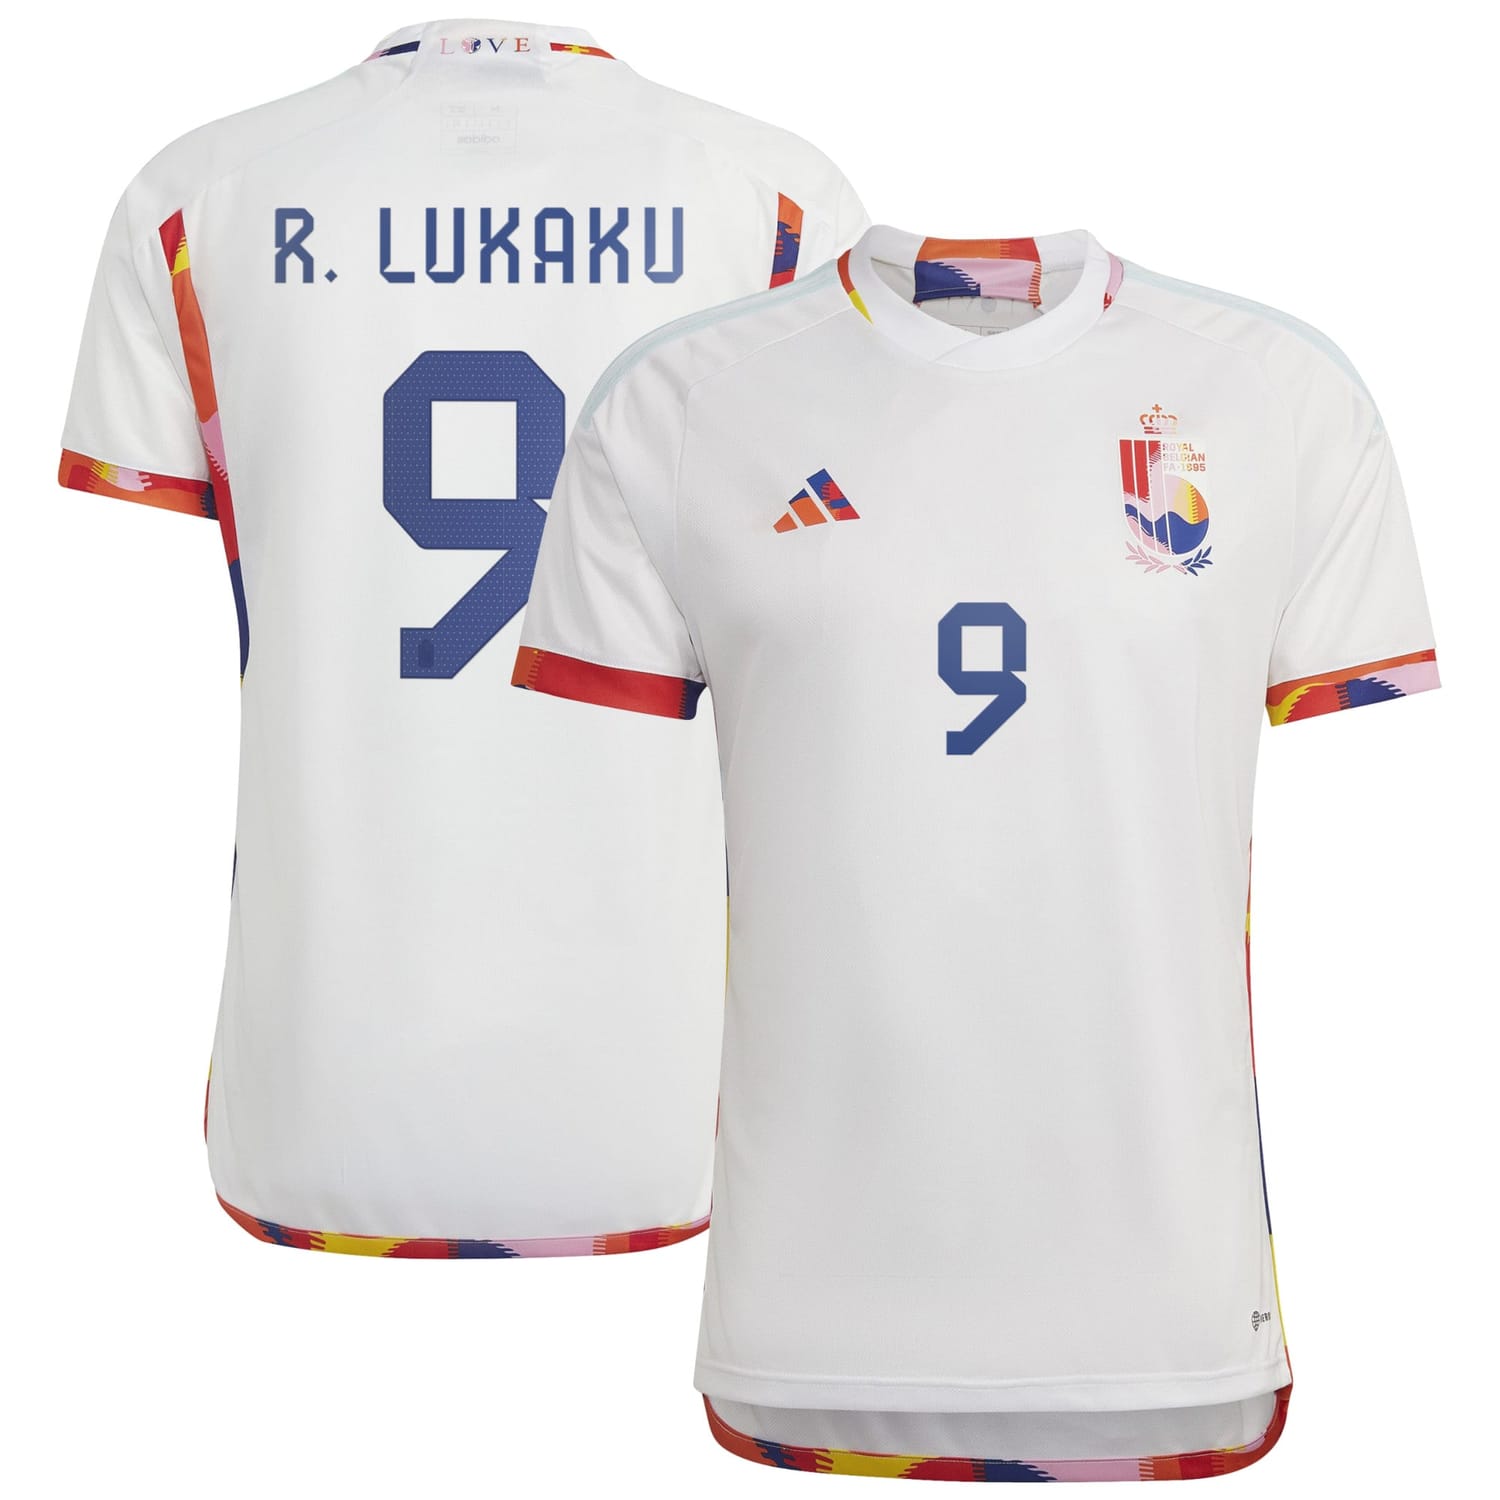 Belgium National Team Away Jersey Shirt player Romelu Lukaku 9 printing for Men